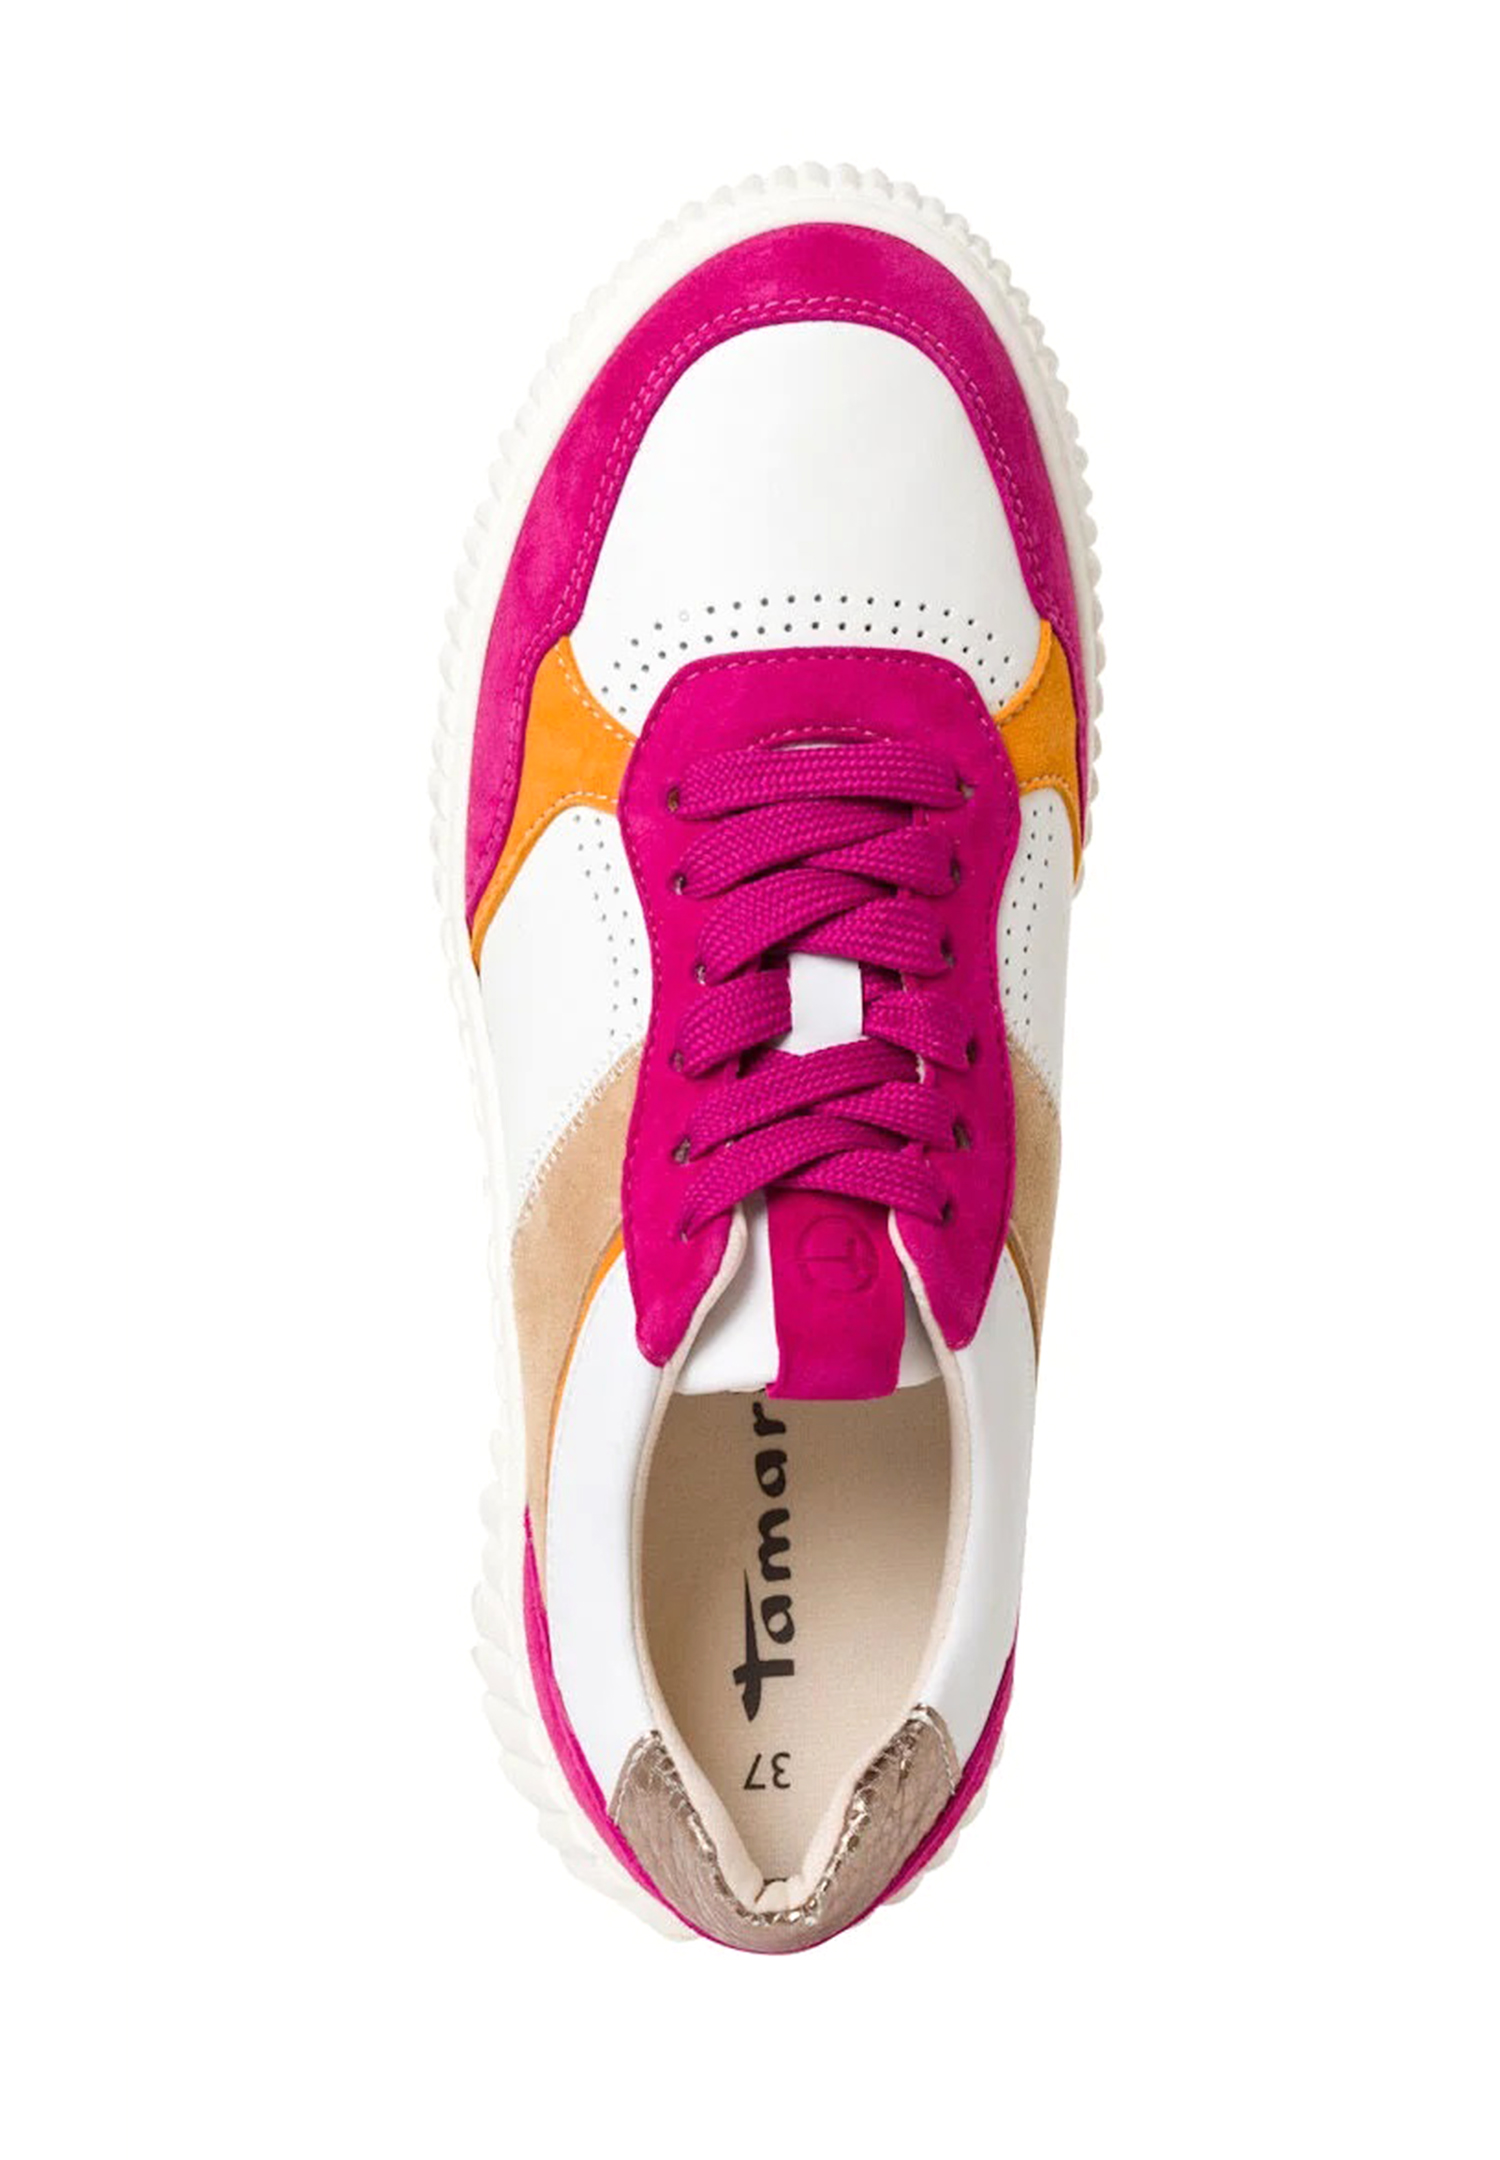 Tamaris Sneaker 1-23771-42 595 Damen Low Top Frauen Schuhe M2377142 